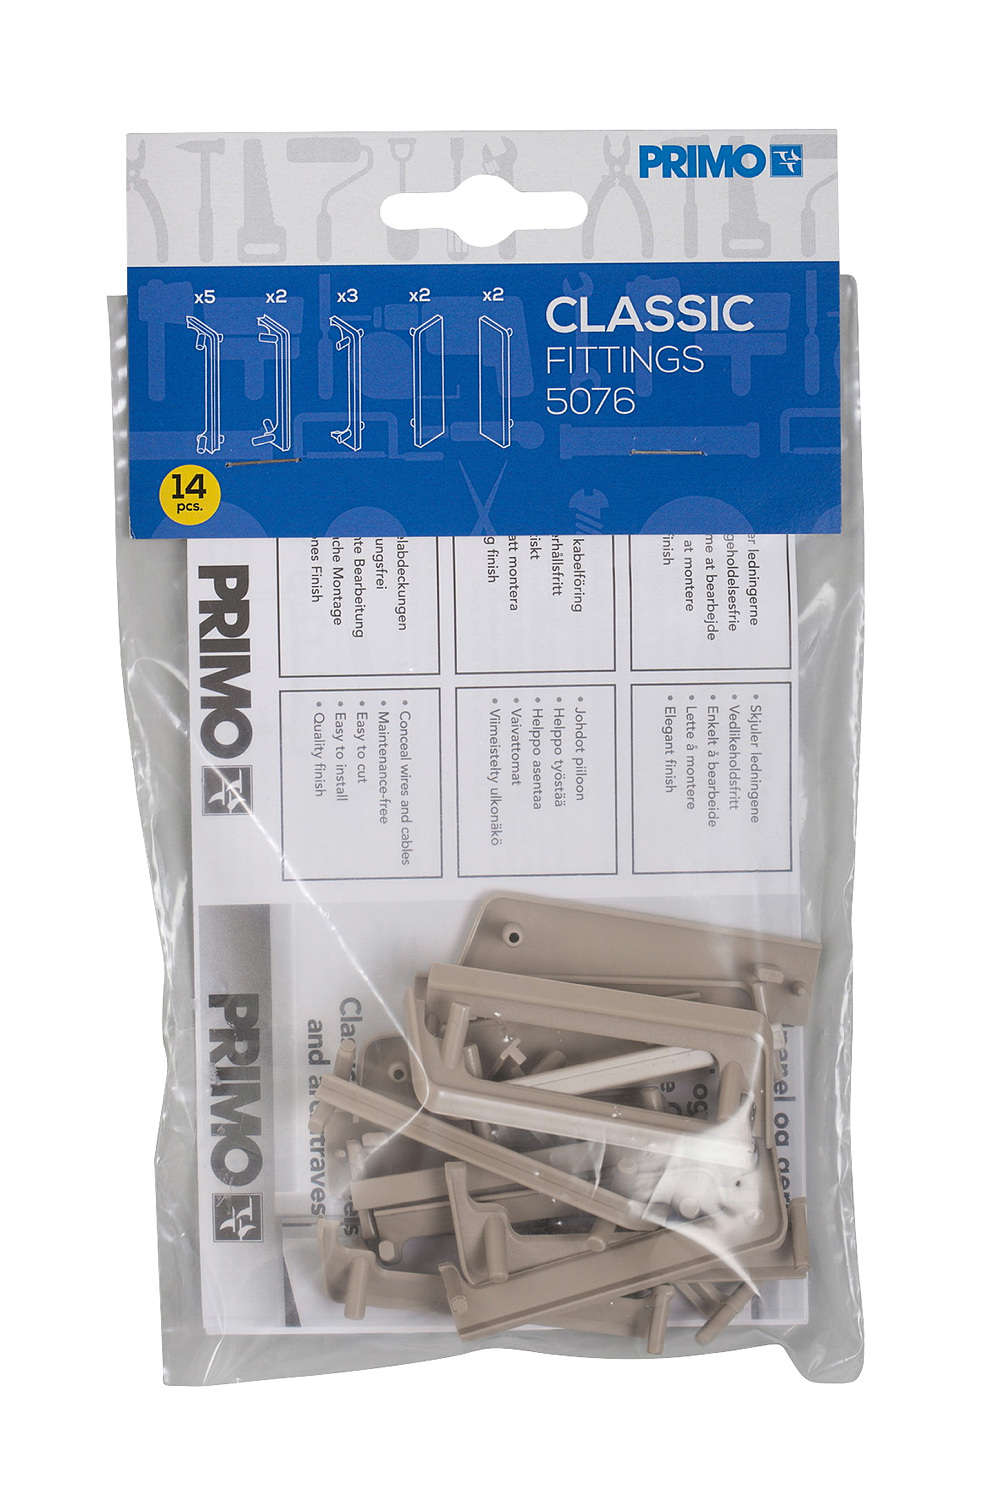 PRIMO Multipack Fittings für Classic 5076, Sand 14-teilig